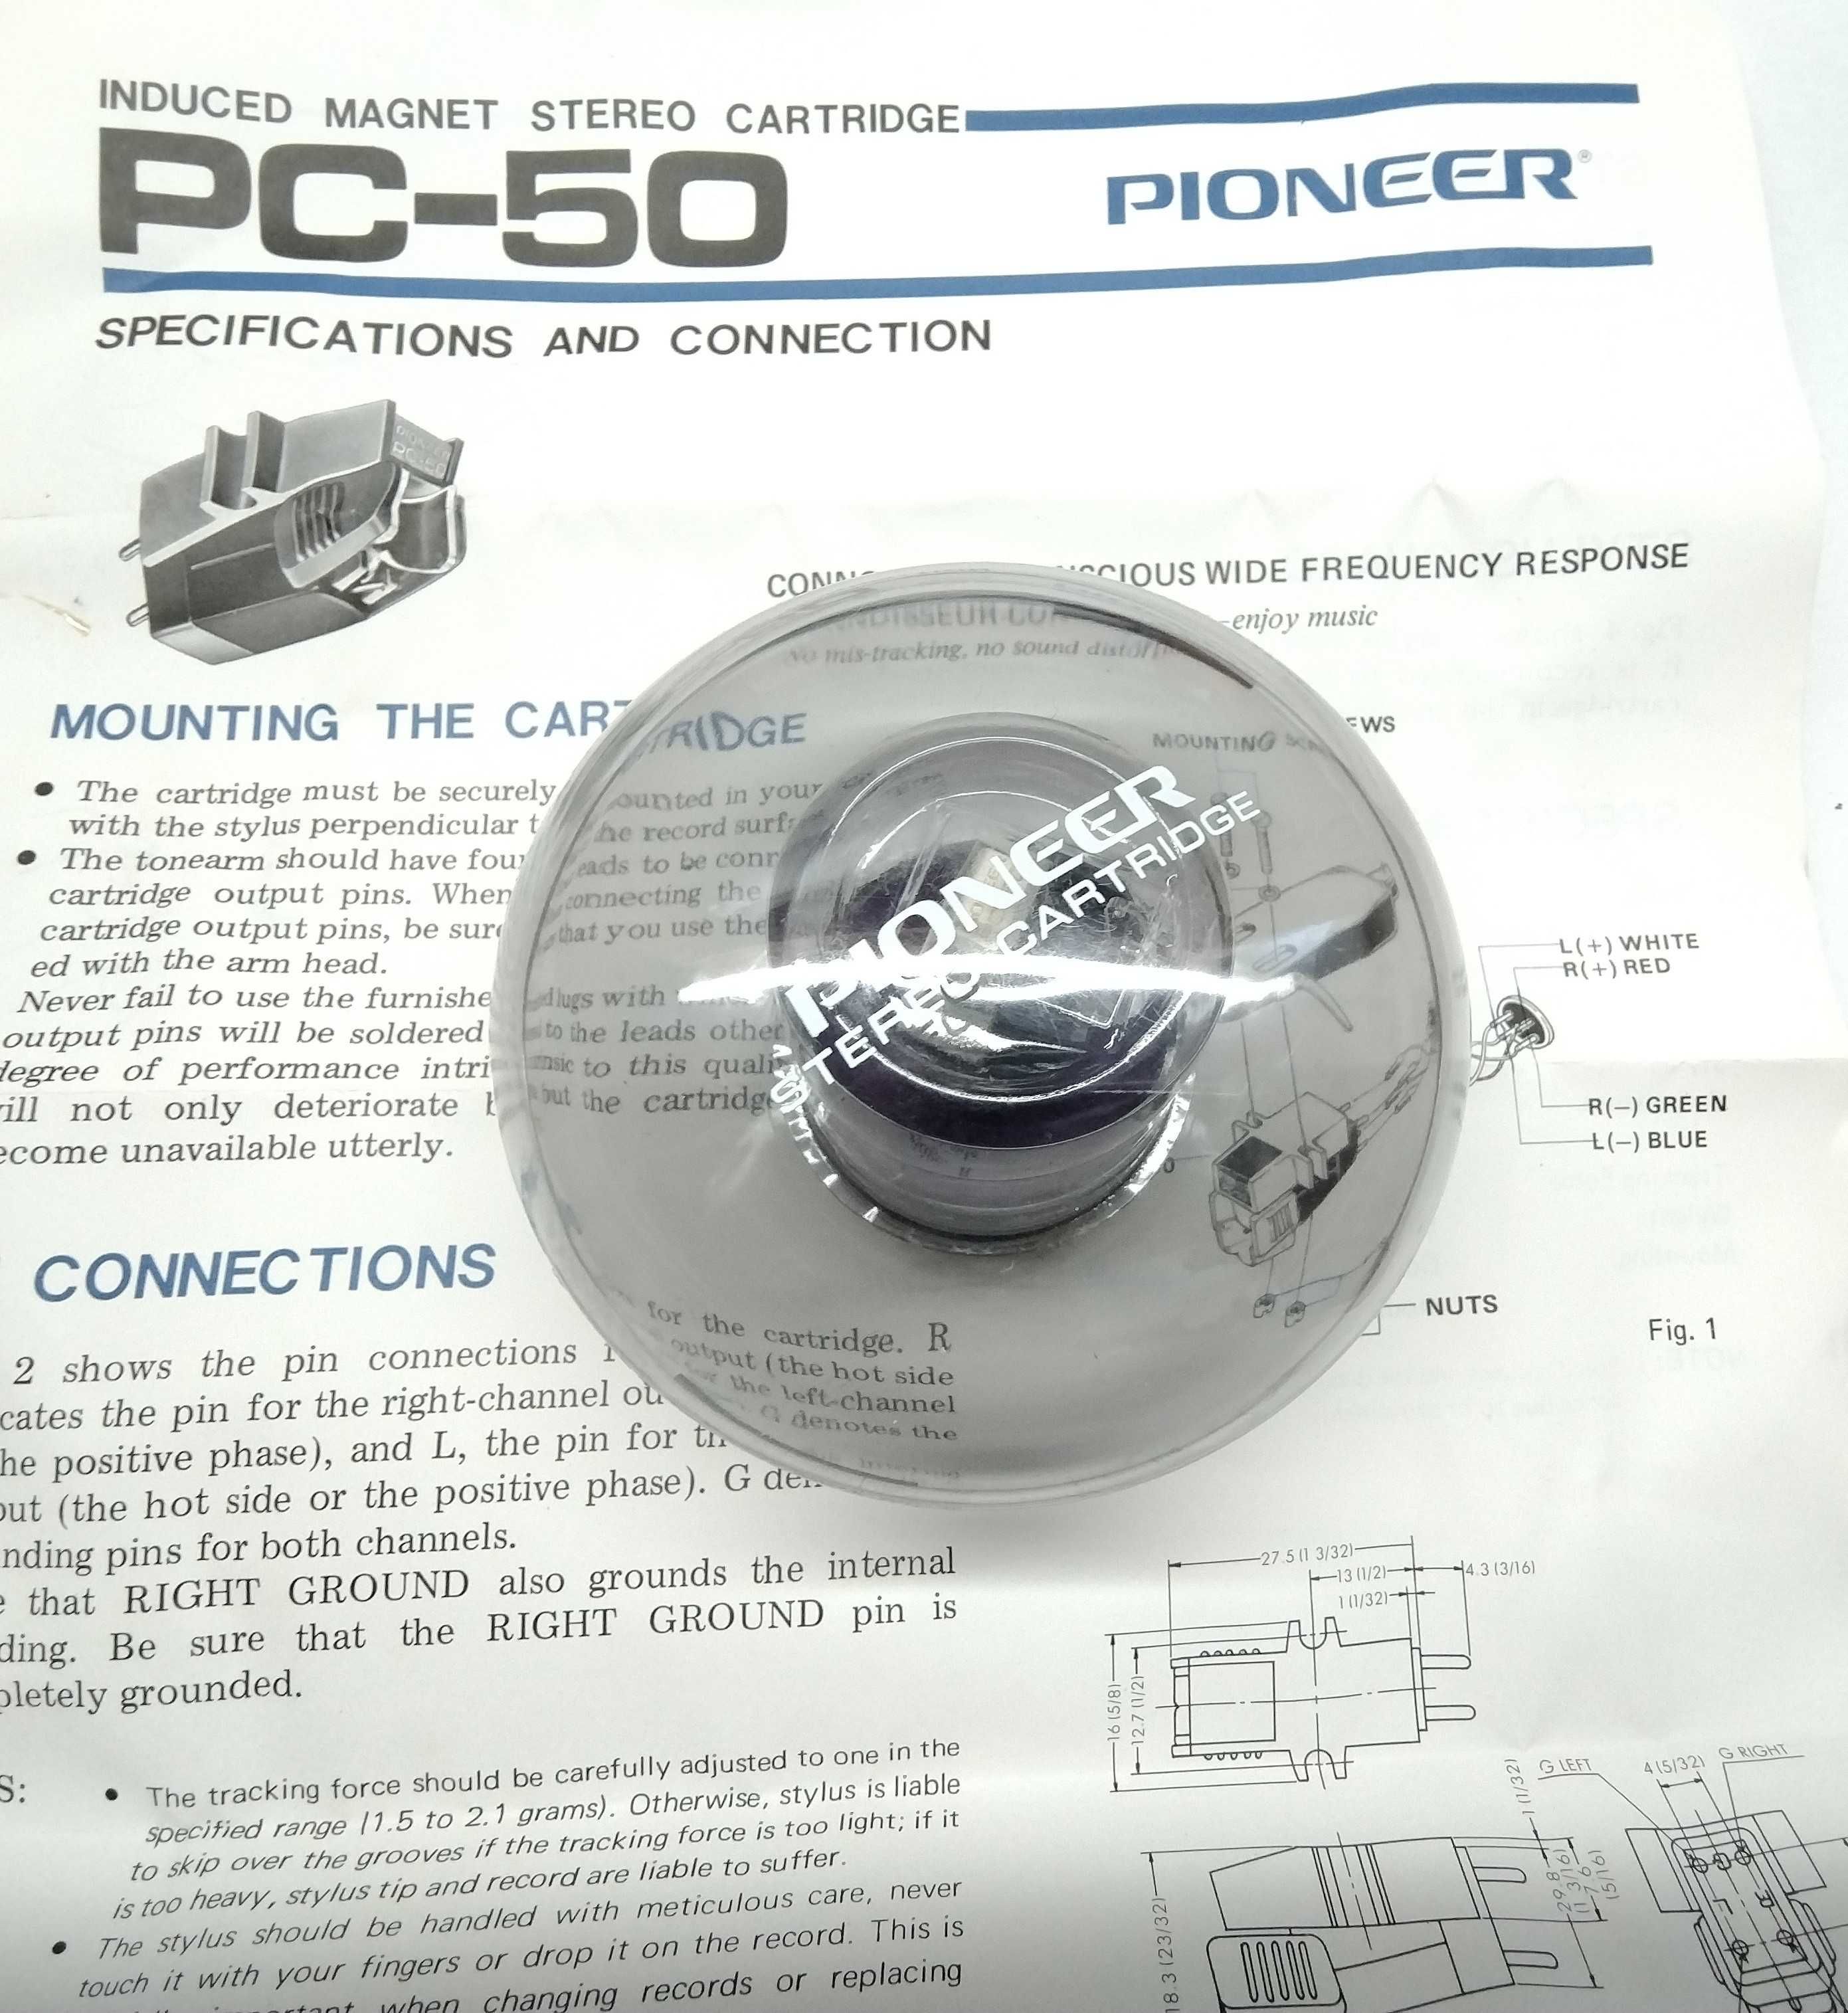 Wkładka do gramofonu Pioneer PC-50